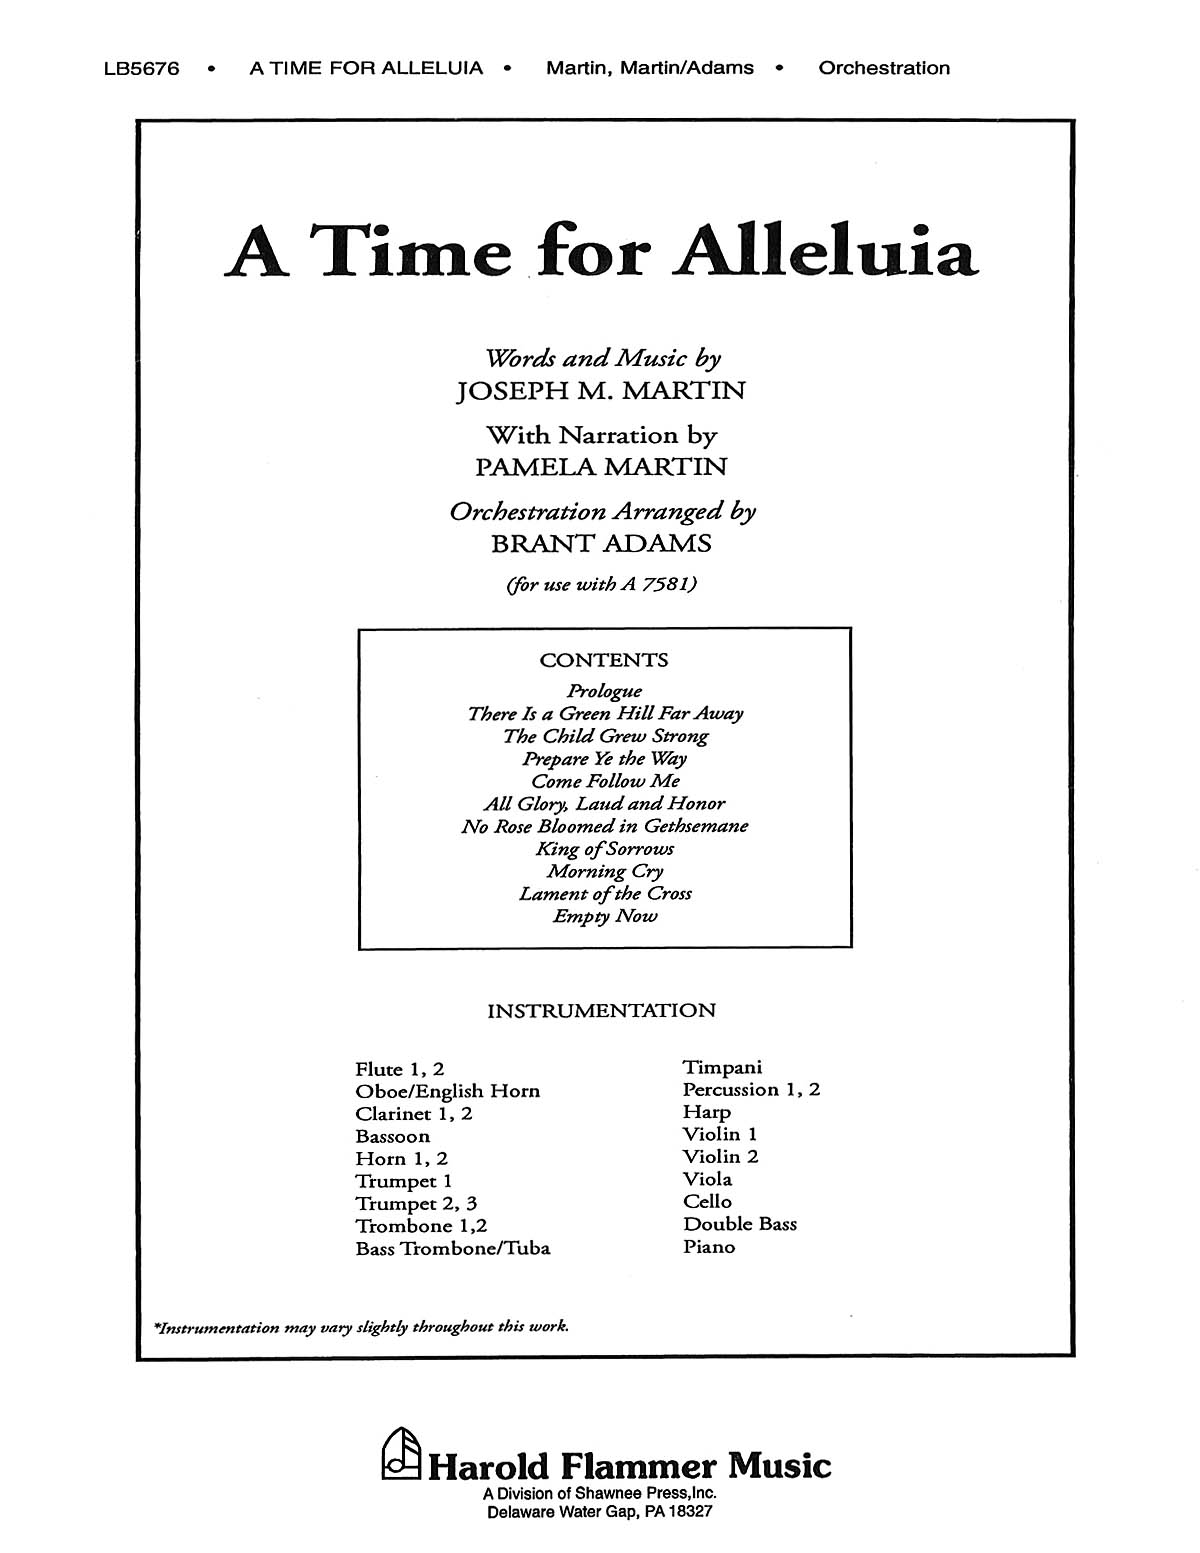 Brant Adams Joseph M. Martin Pamela Martin: A Time for Alleluia: Orchestra: